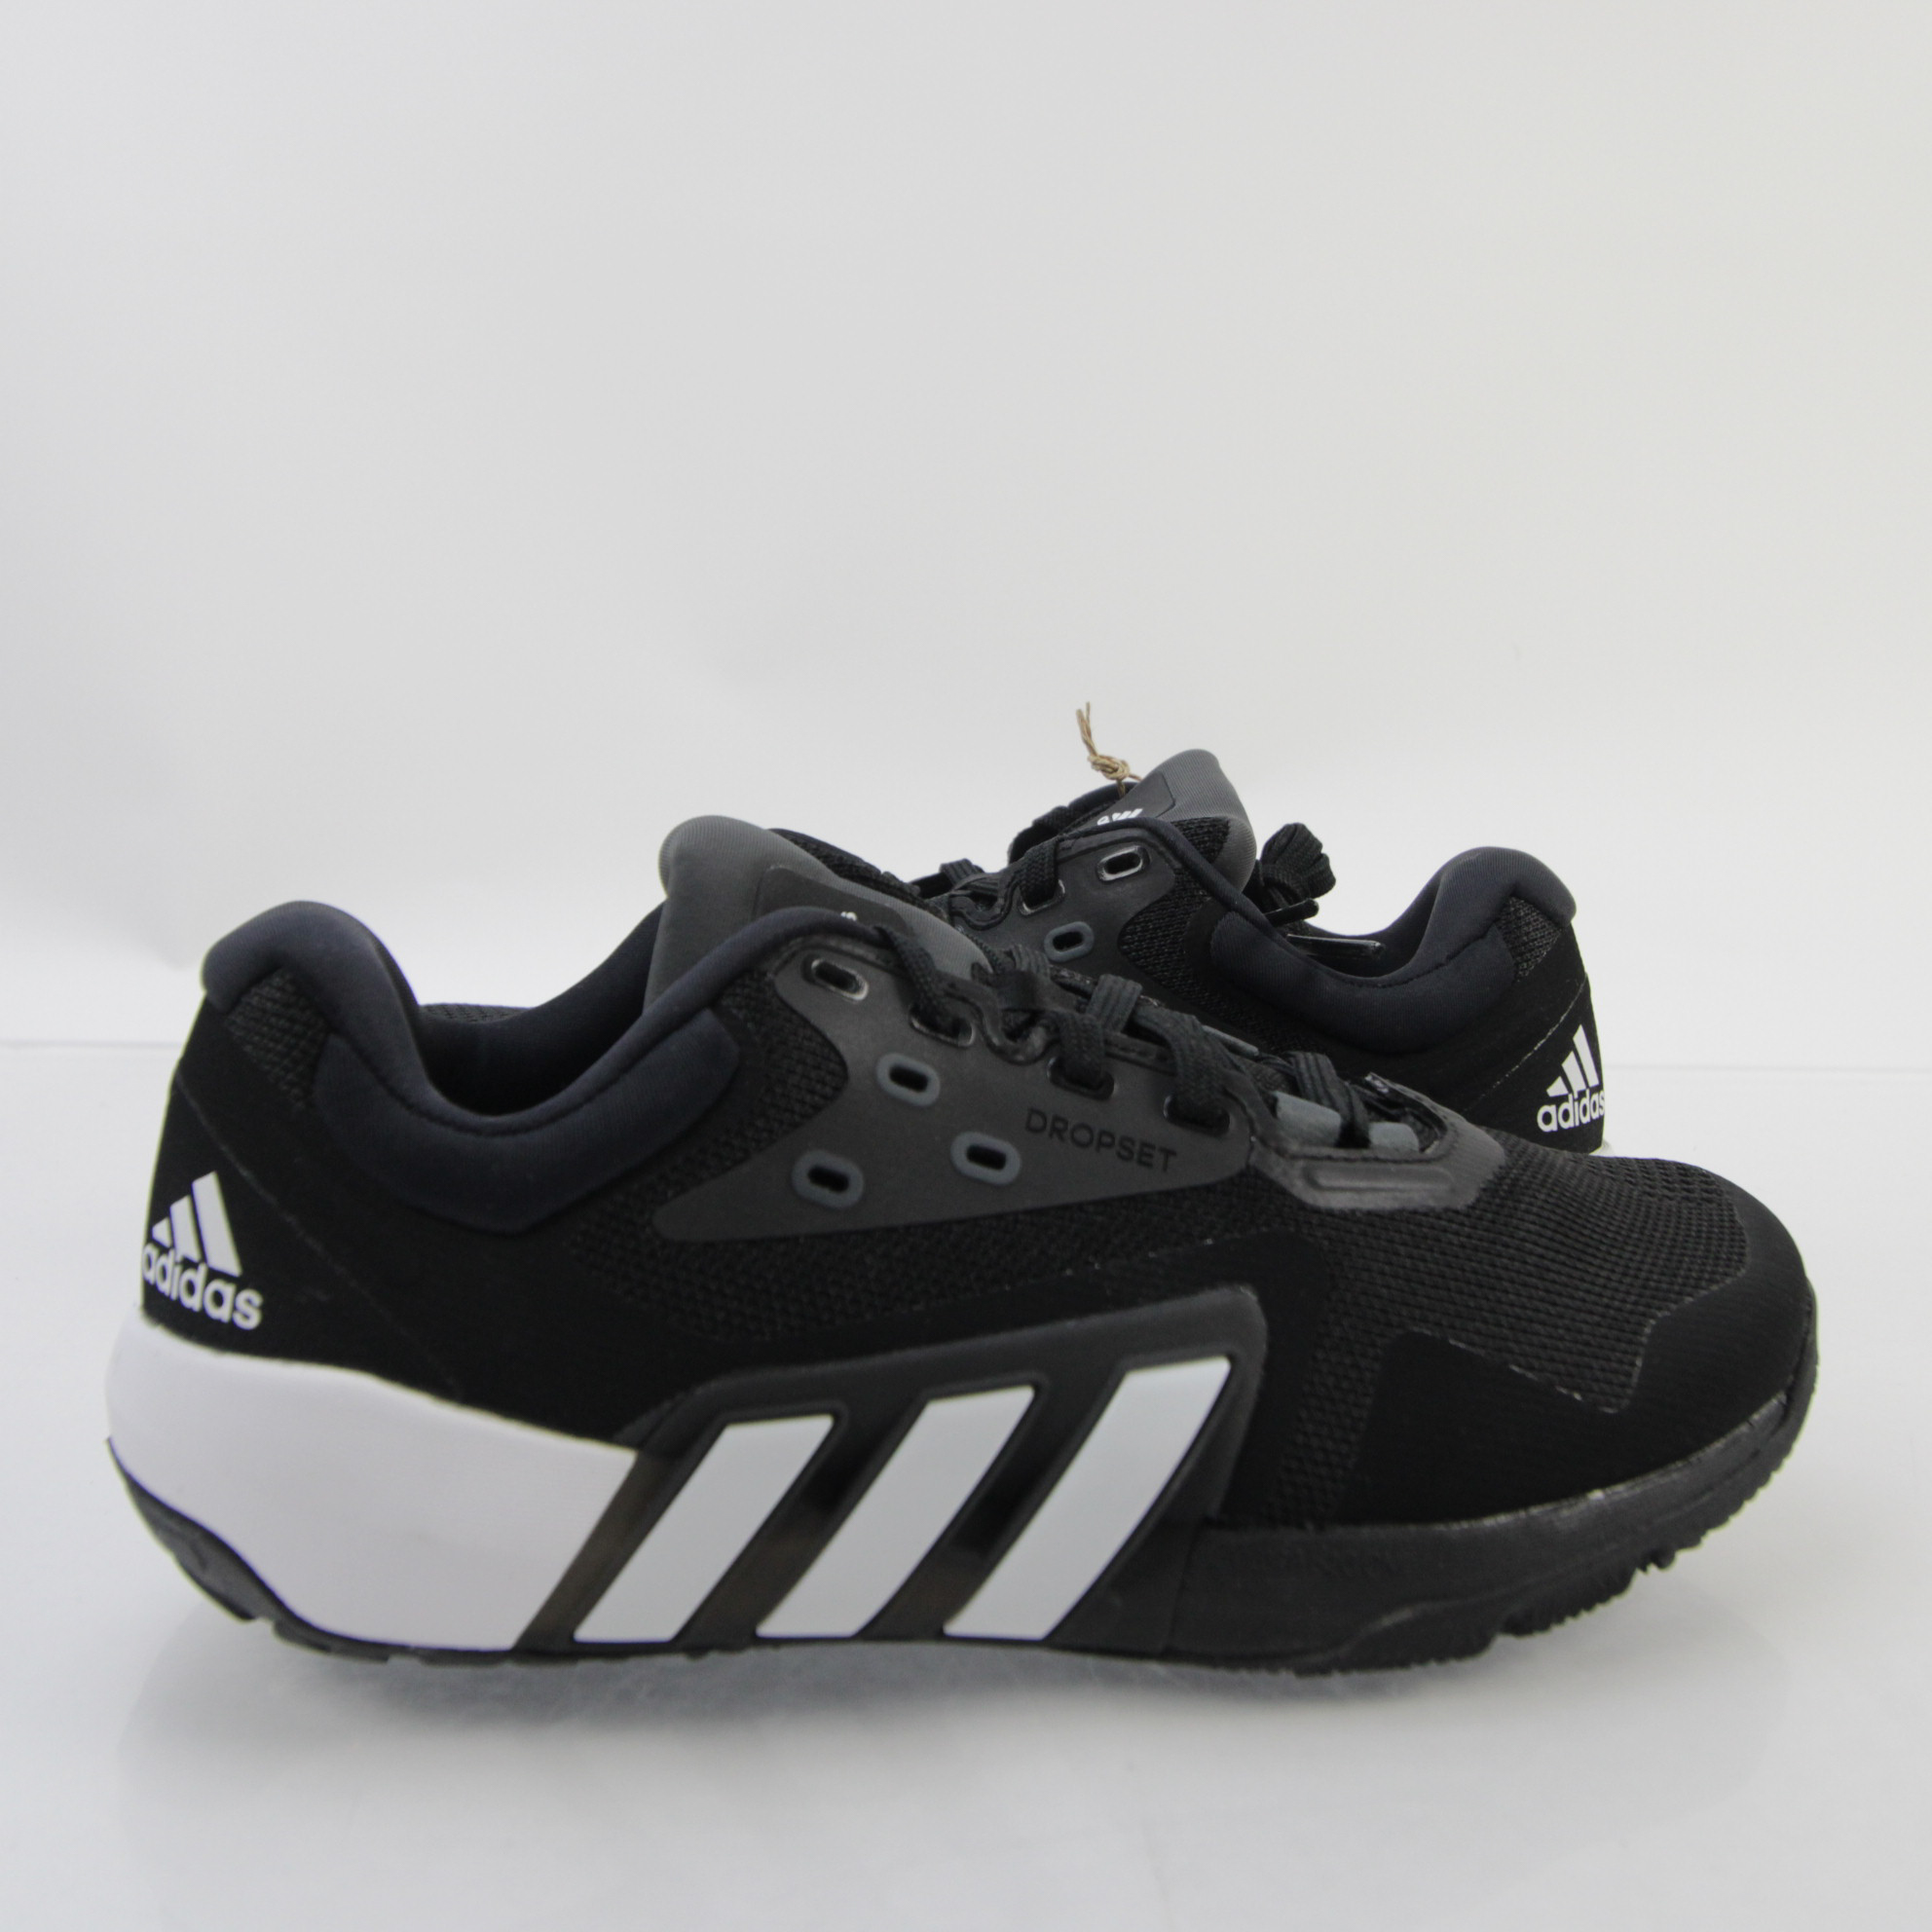 adidas Cross Training Shoes Men's Black/White New without Box | eBay